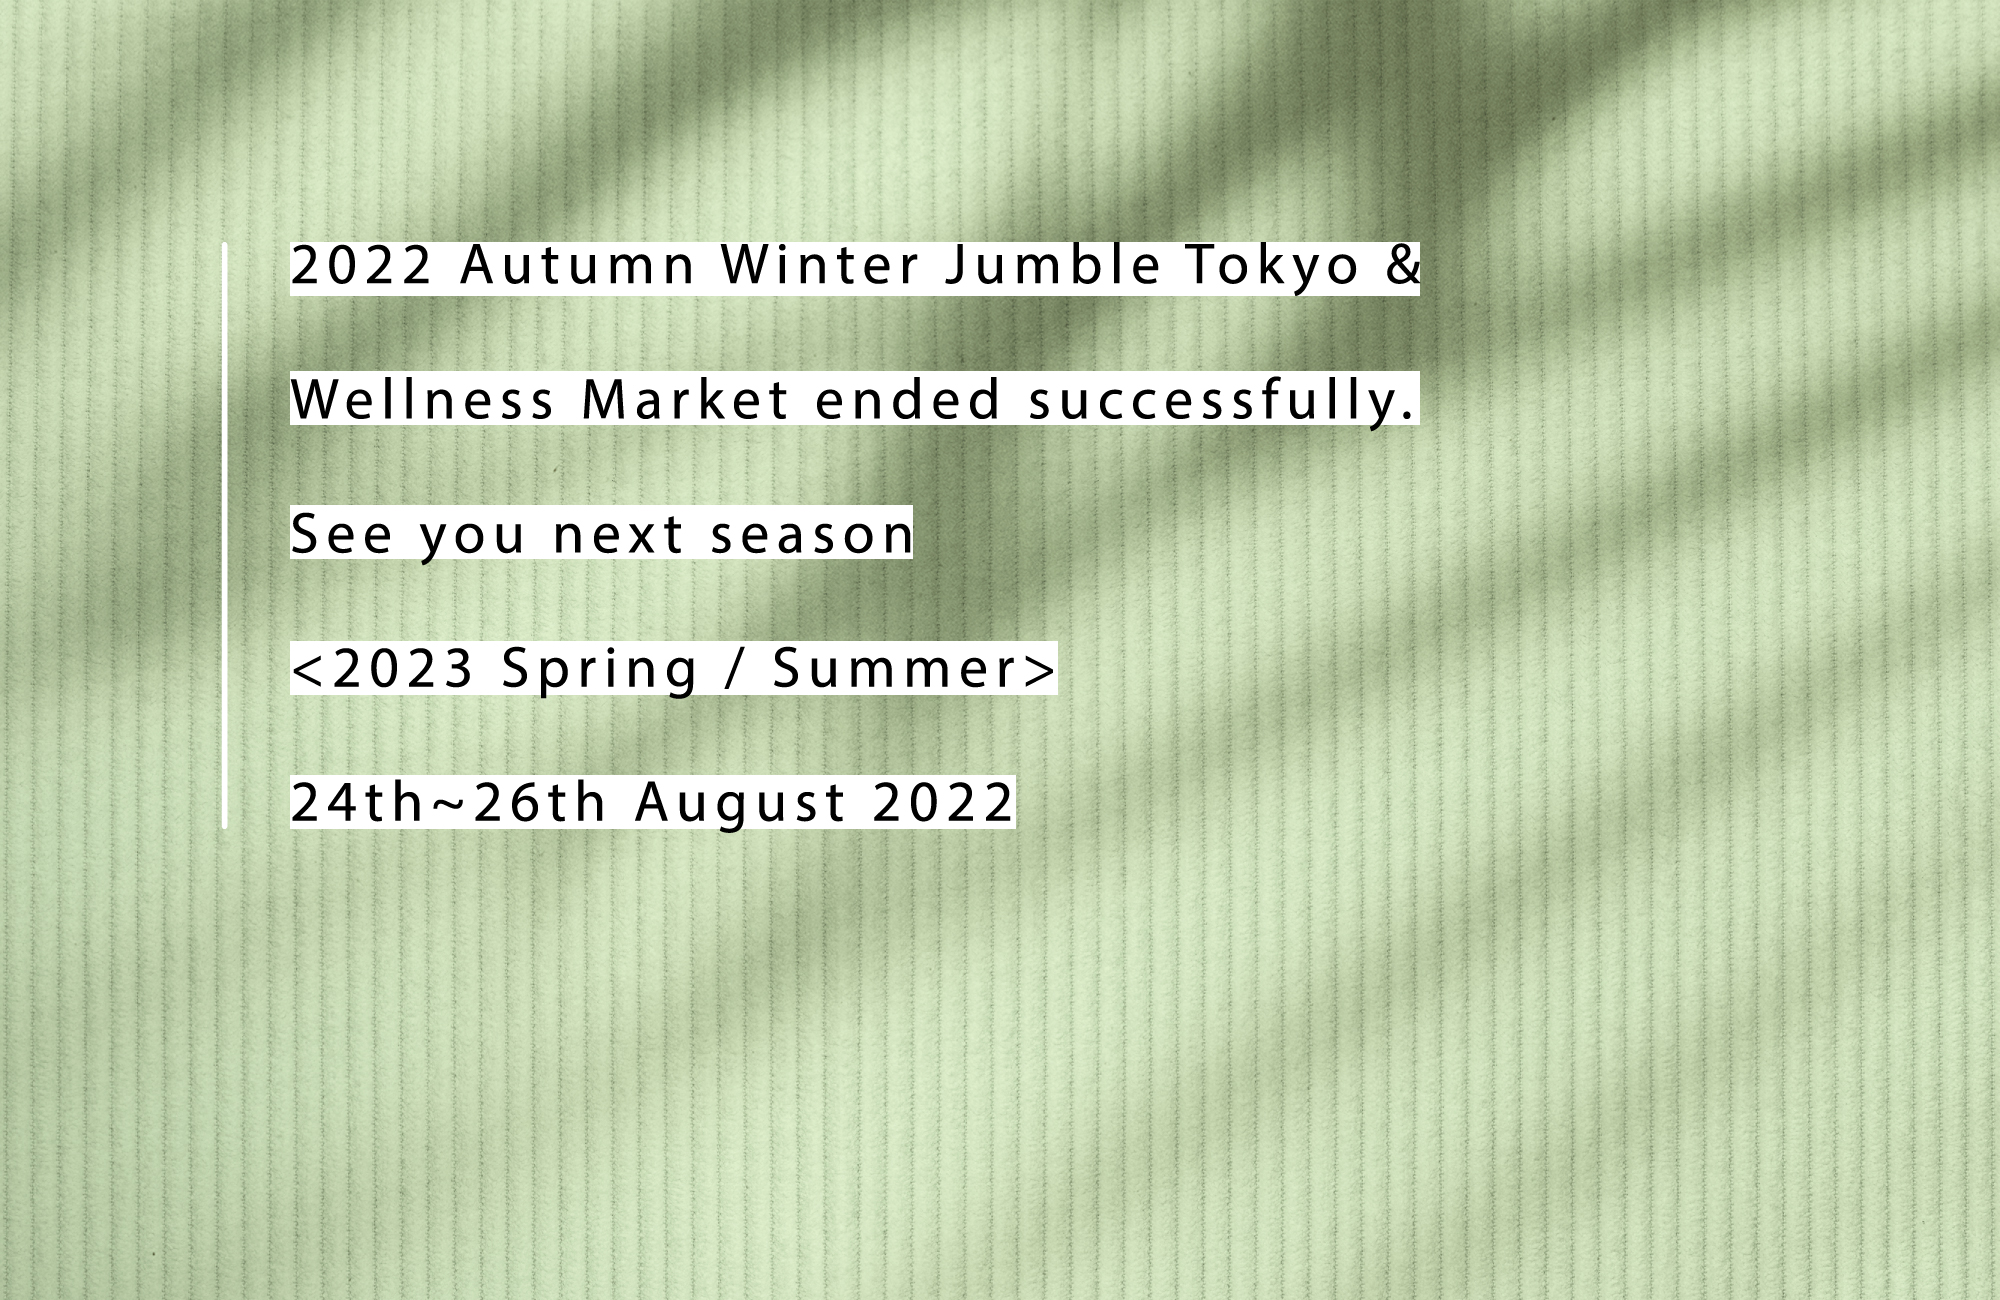 JUMBLE TOKYOのスタートは2004年秋 HOTEL CLASKA（目黒区）で始まり LAFORET MUSEUM HARAJUKU（原宿）, MODAPOLITICA（青山）, ベルサール原宿(外苑),そして2013年度より海外ブランドの出展に対応する為、会場をベルサール渋谷ファースト(渋谷)に移しました。 出展企業も90社を超え、約200ブランドの商品が並びます。